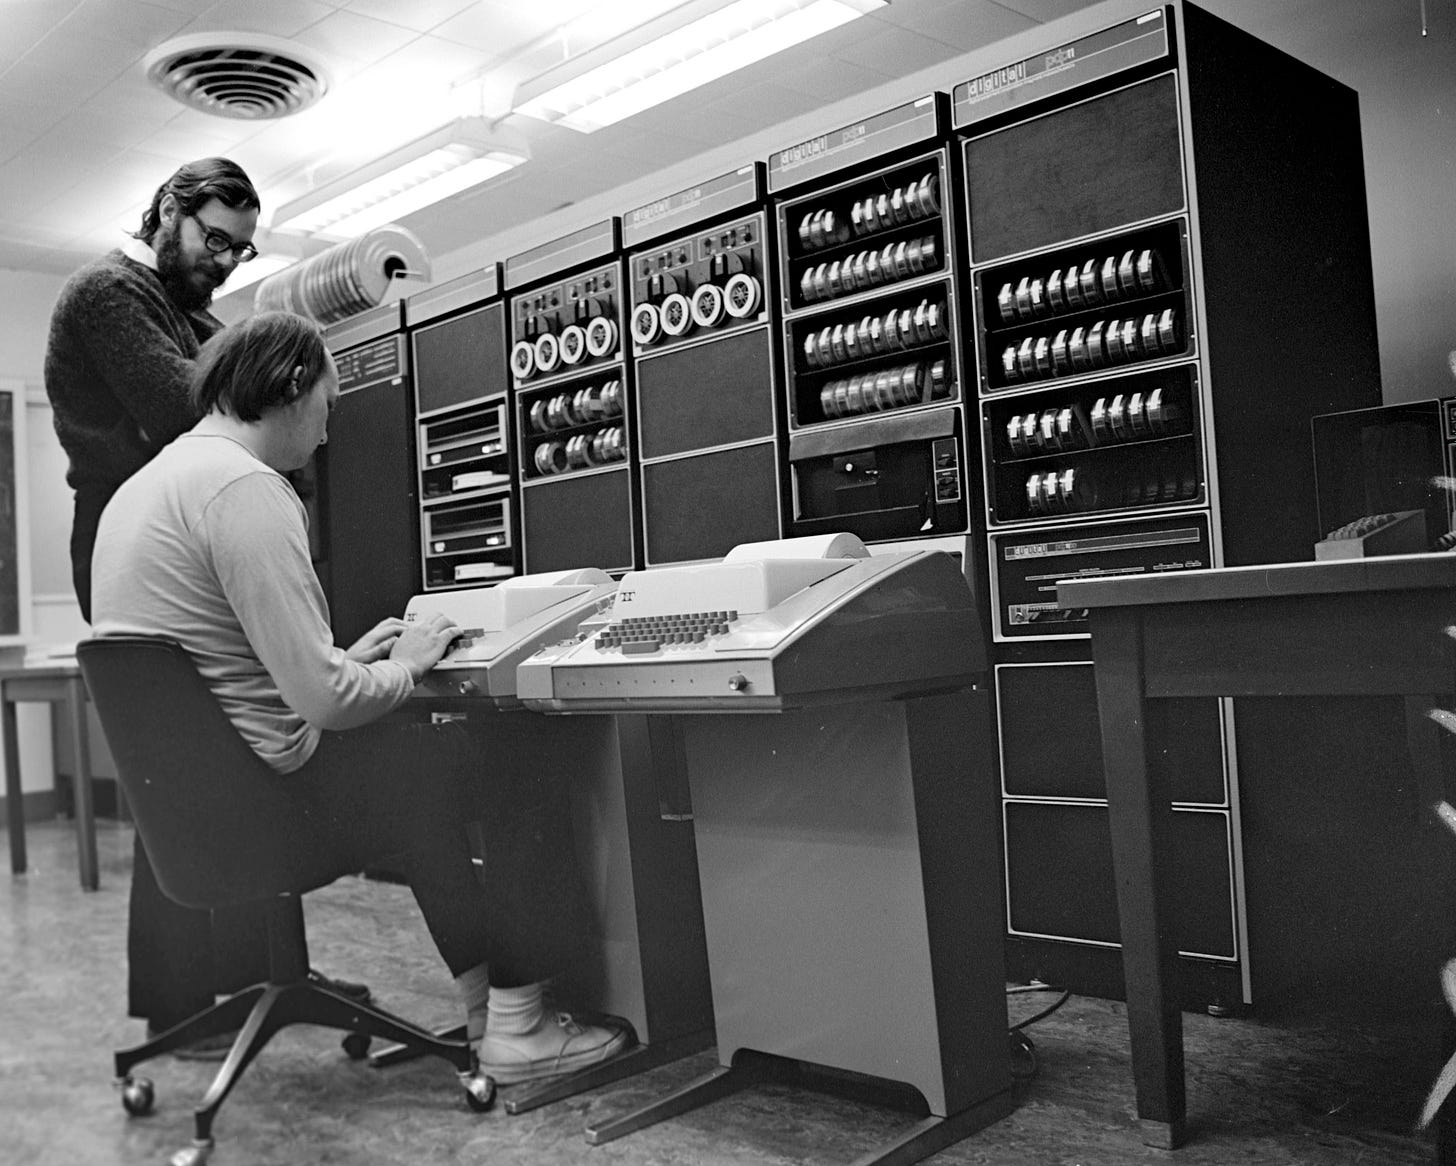 Dennis Ritchie: The shoulders Steve Jobs stood on | CNN Business